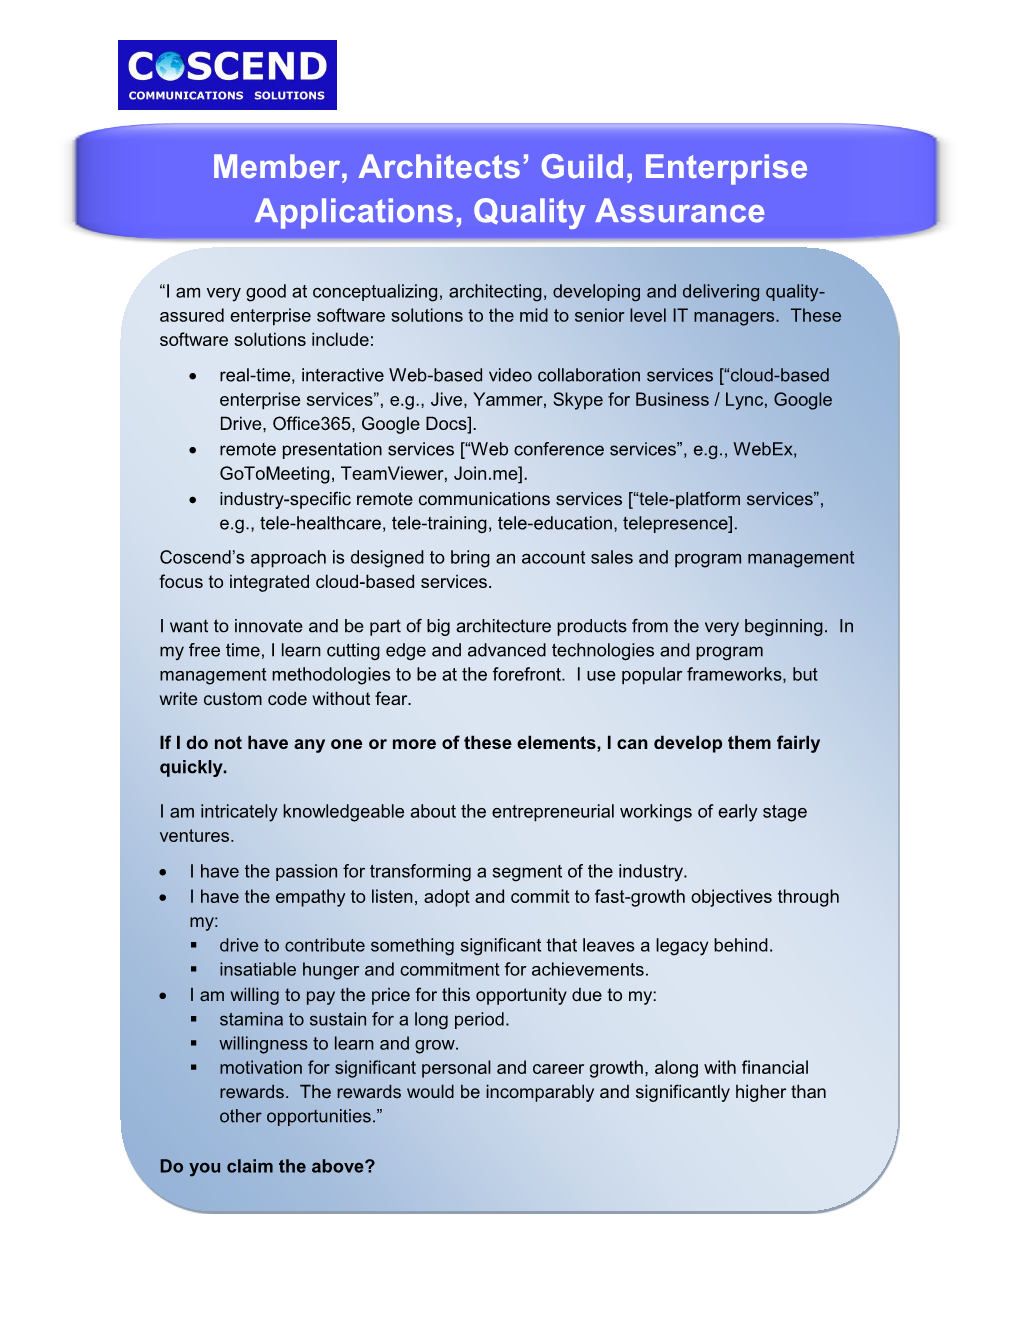 Member, Architects' Guild, Enterprise Applications, Quality Assurance